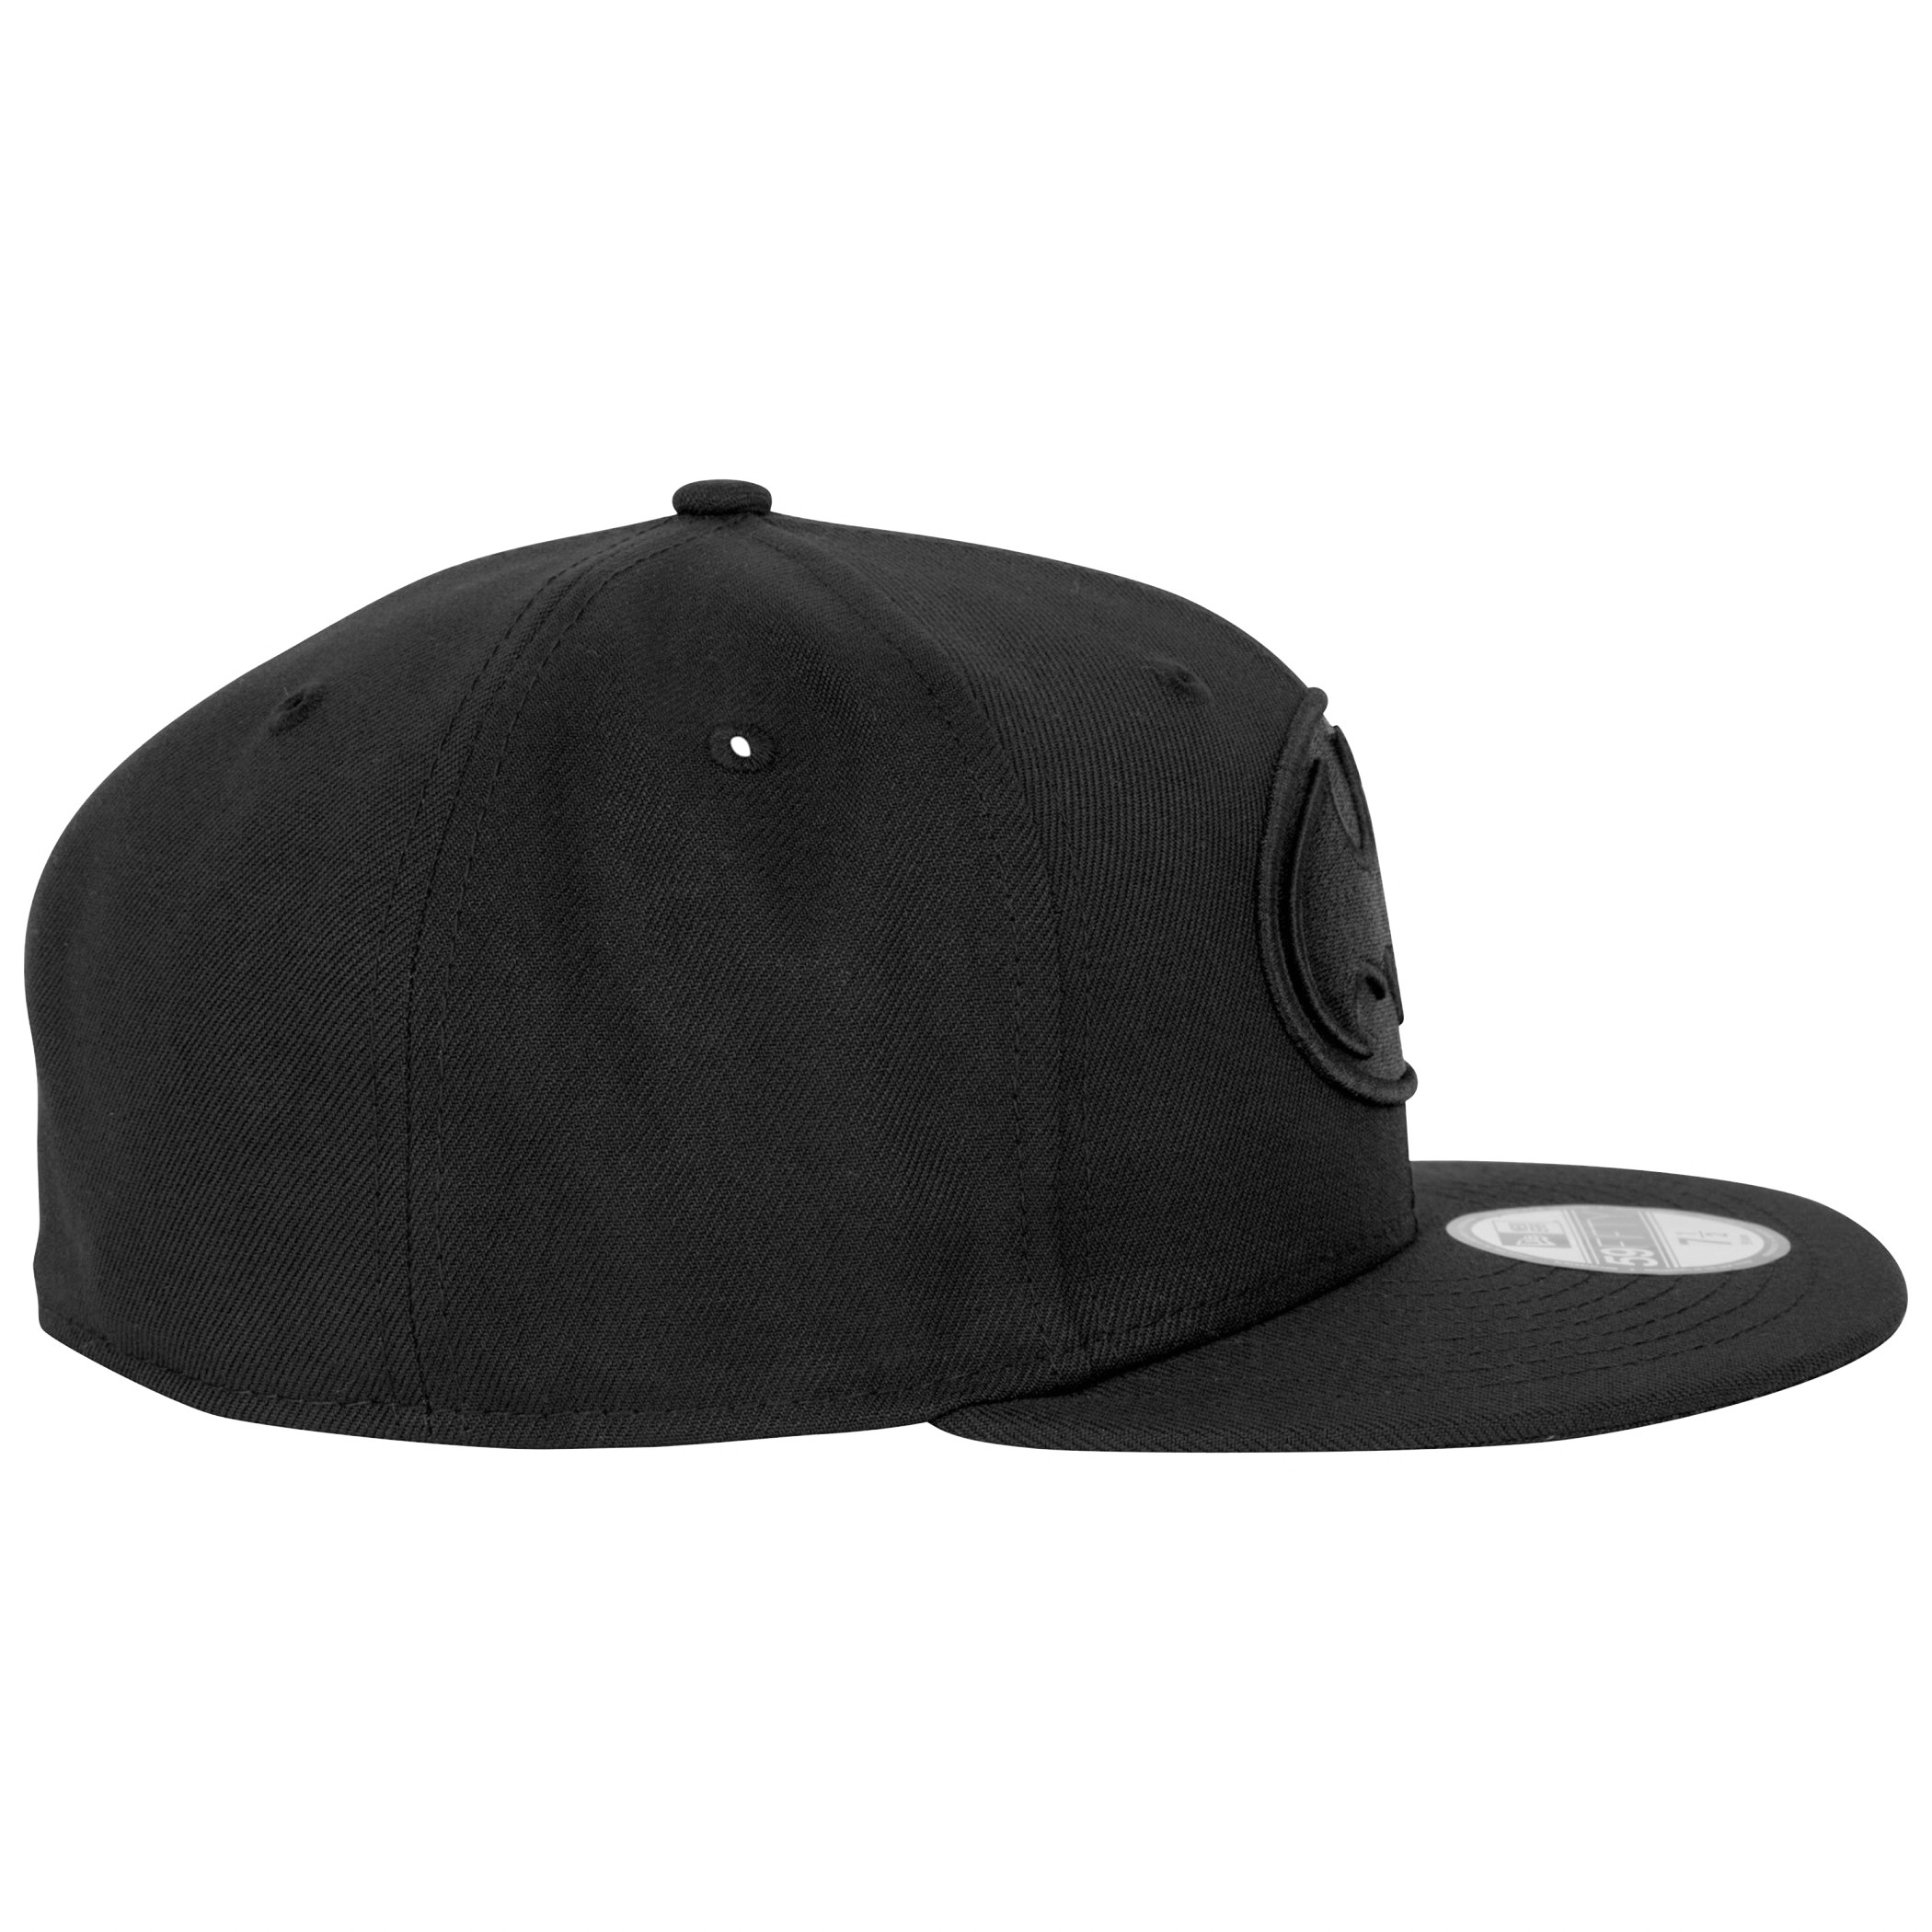 Batman Logo Black on Black New Era 59Fifty Fitted Hat